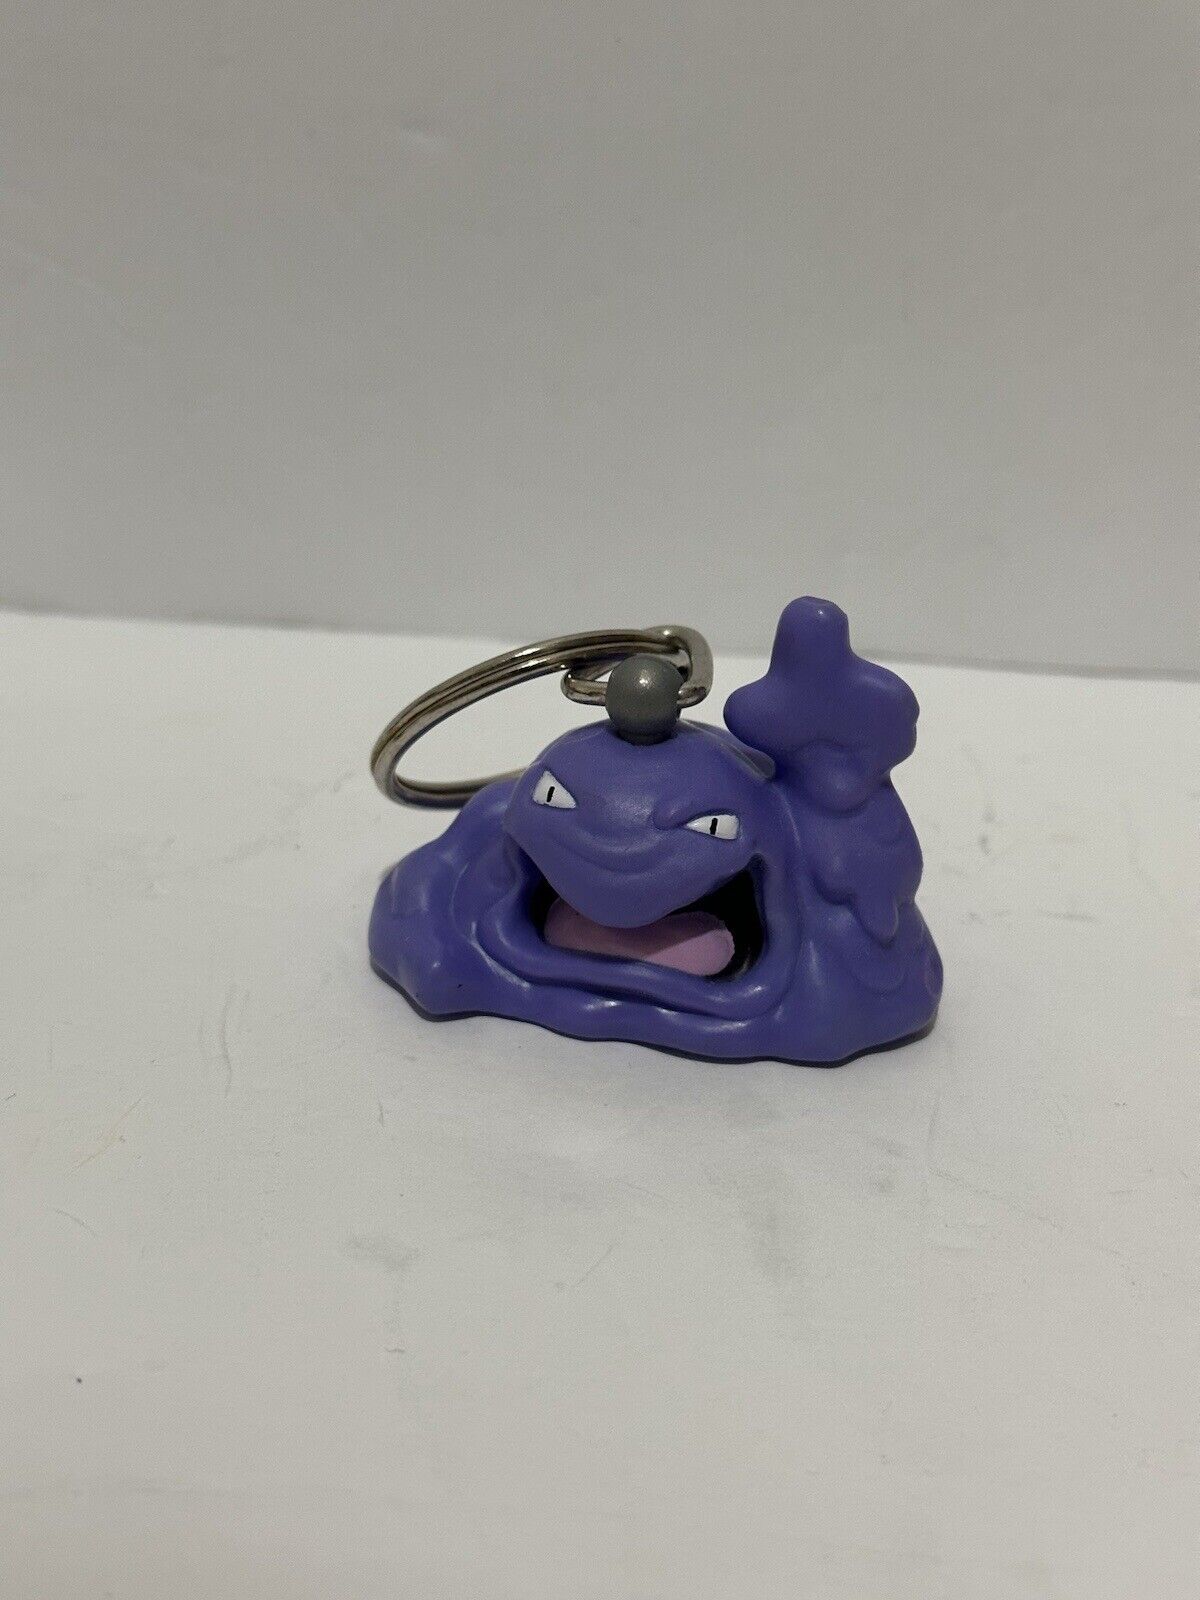 Vintage 1999 Pokemon Nintendo Character Muk Purple Burger King Key Chain Toy